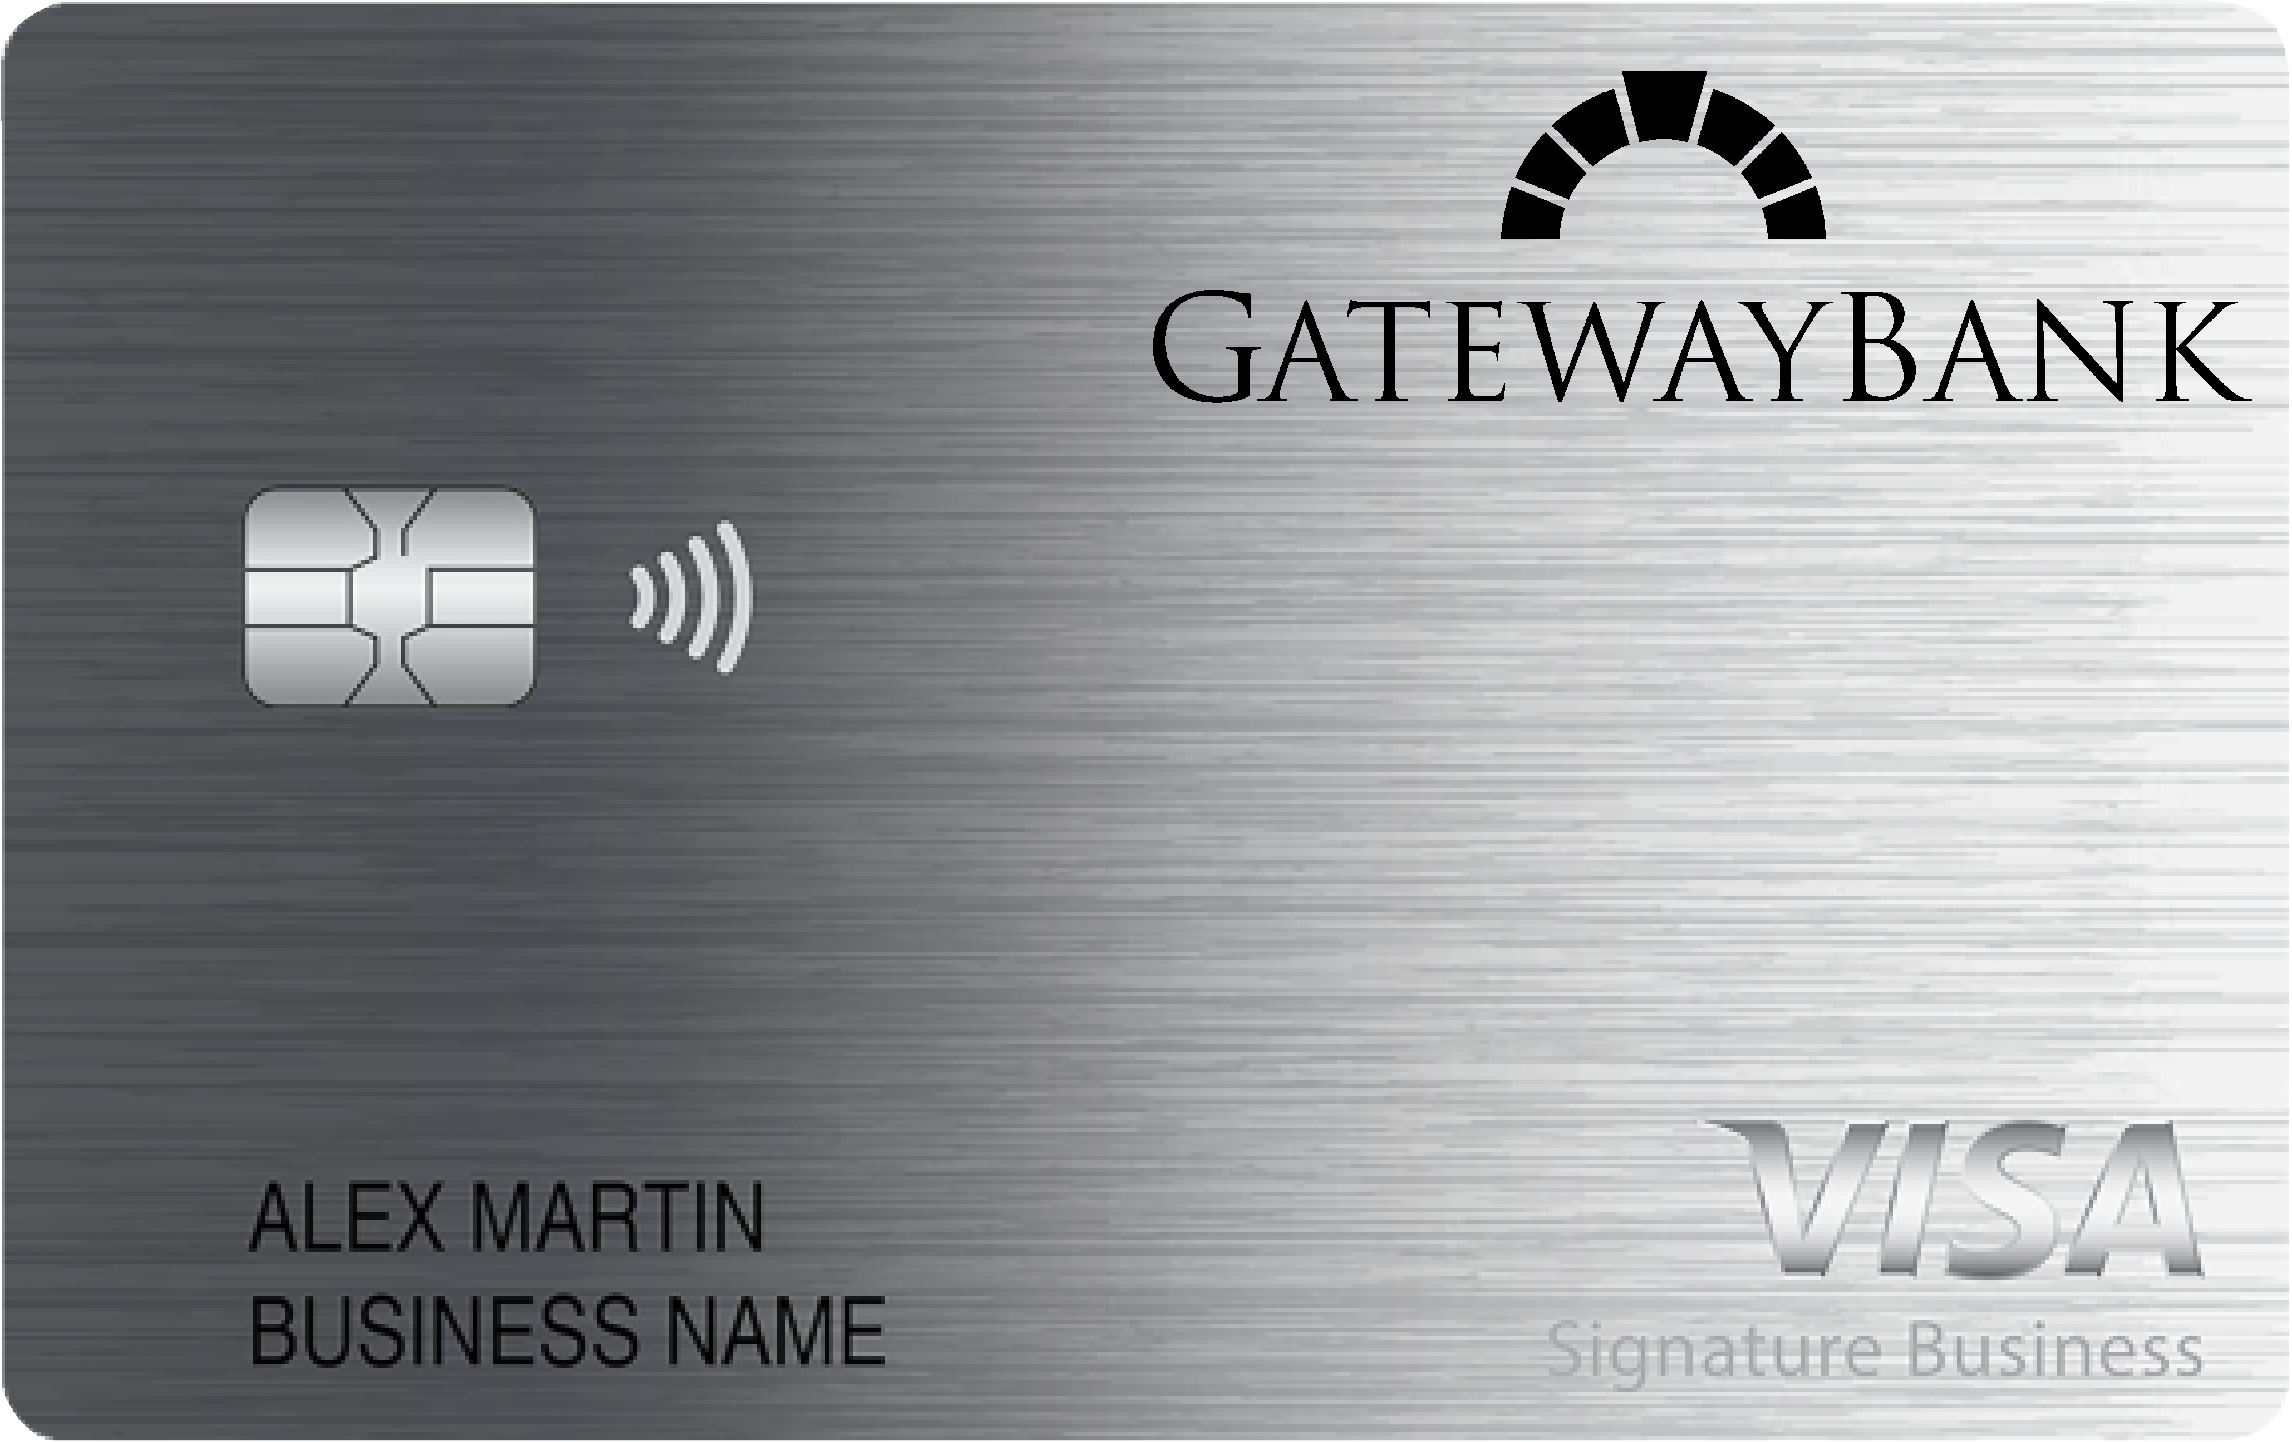 Gateway Bank Smart Business Rewards Card